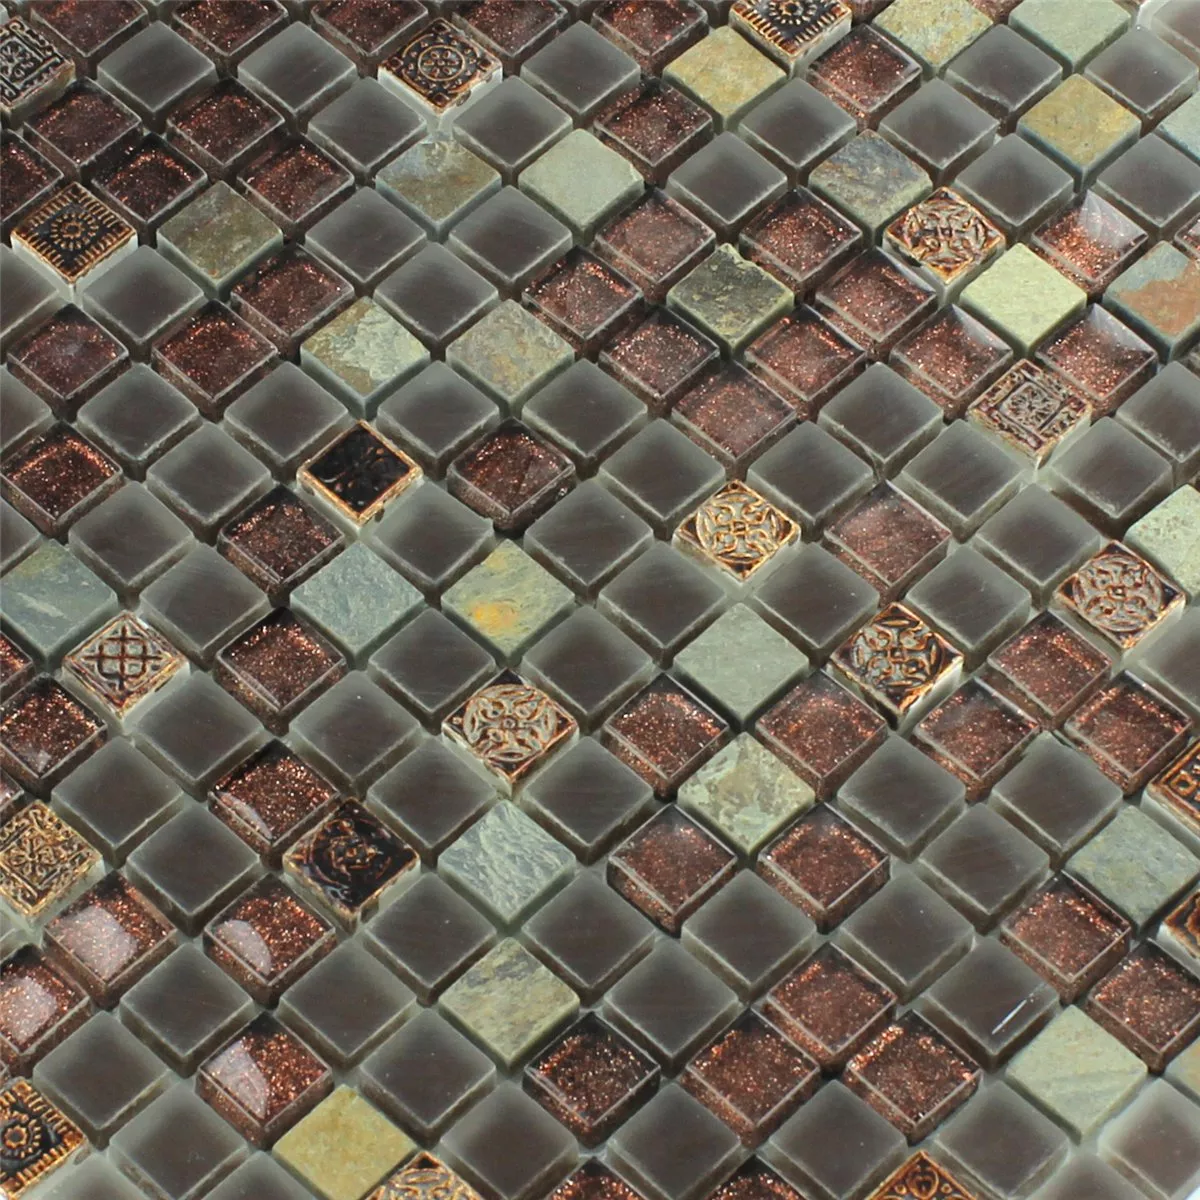 Vetro Calcare Quarzite Mosaico Piastrella Luccichio